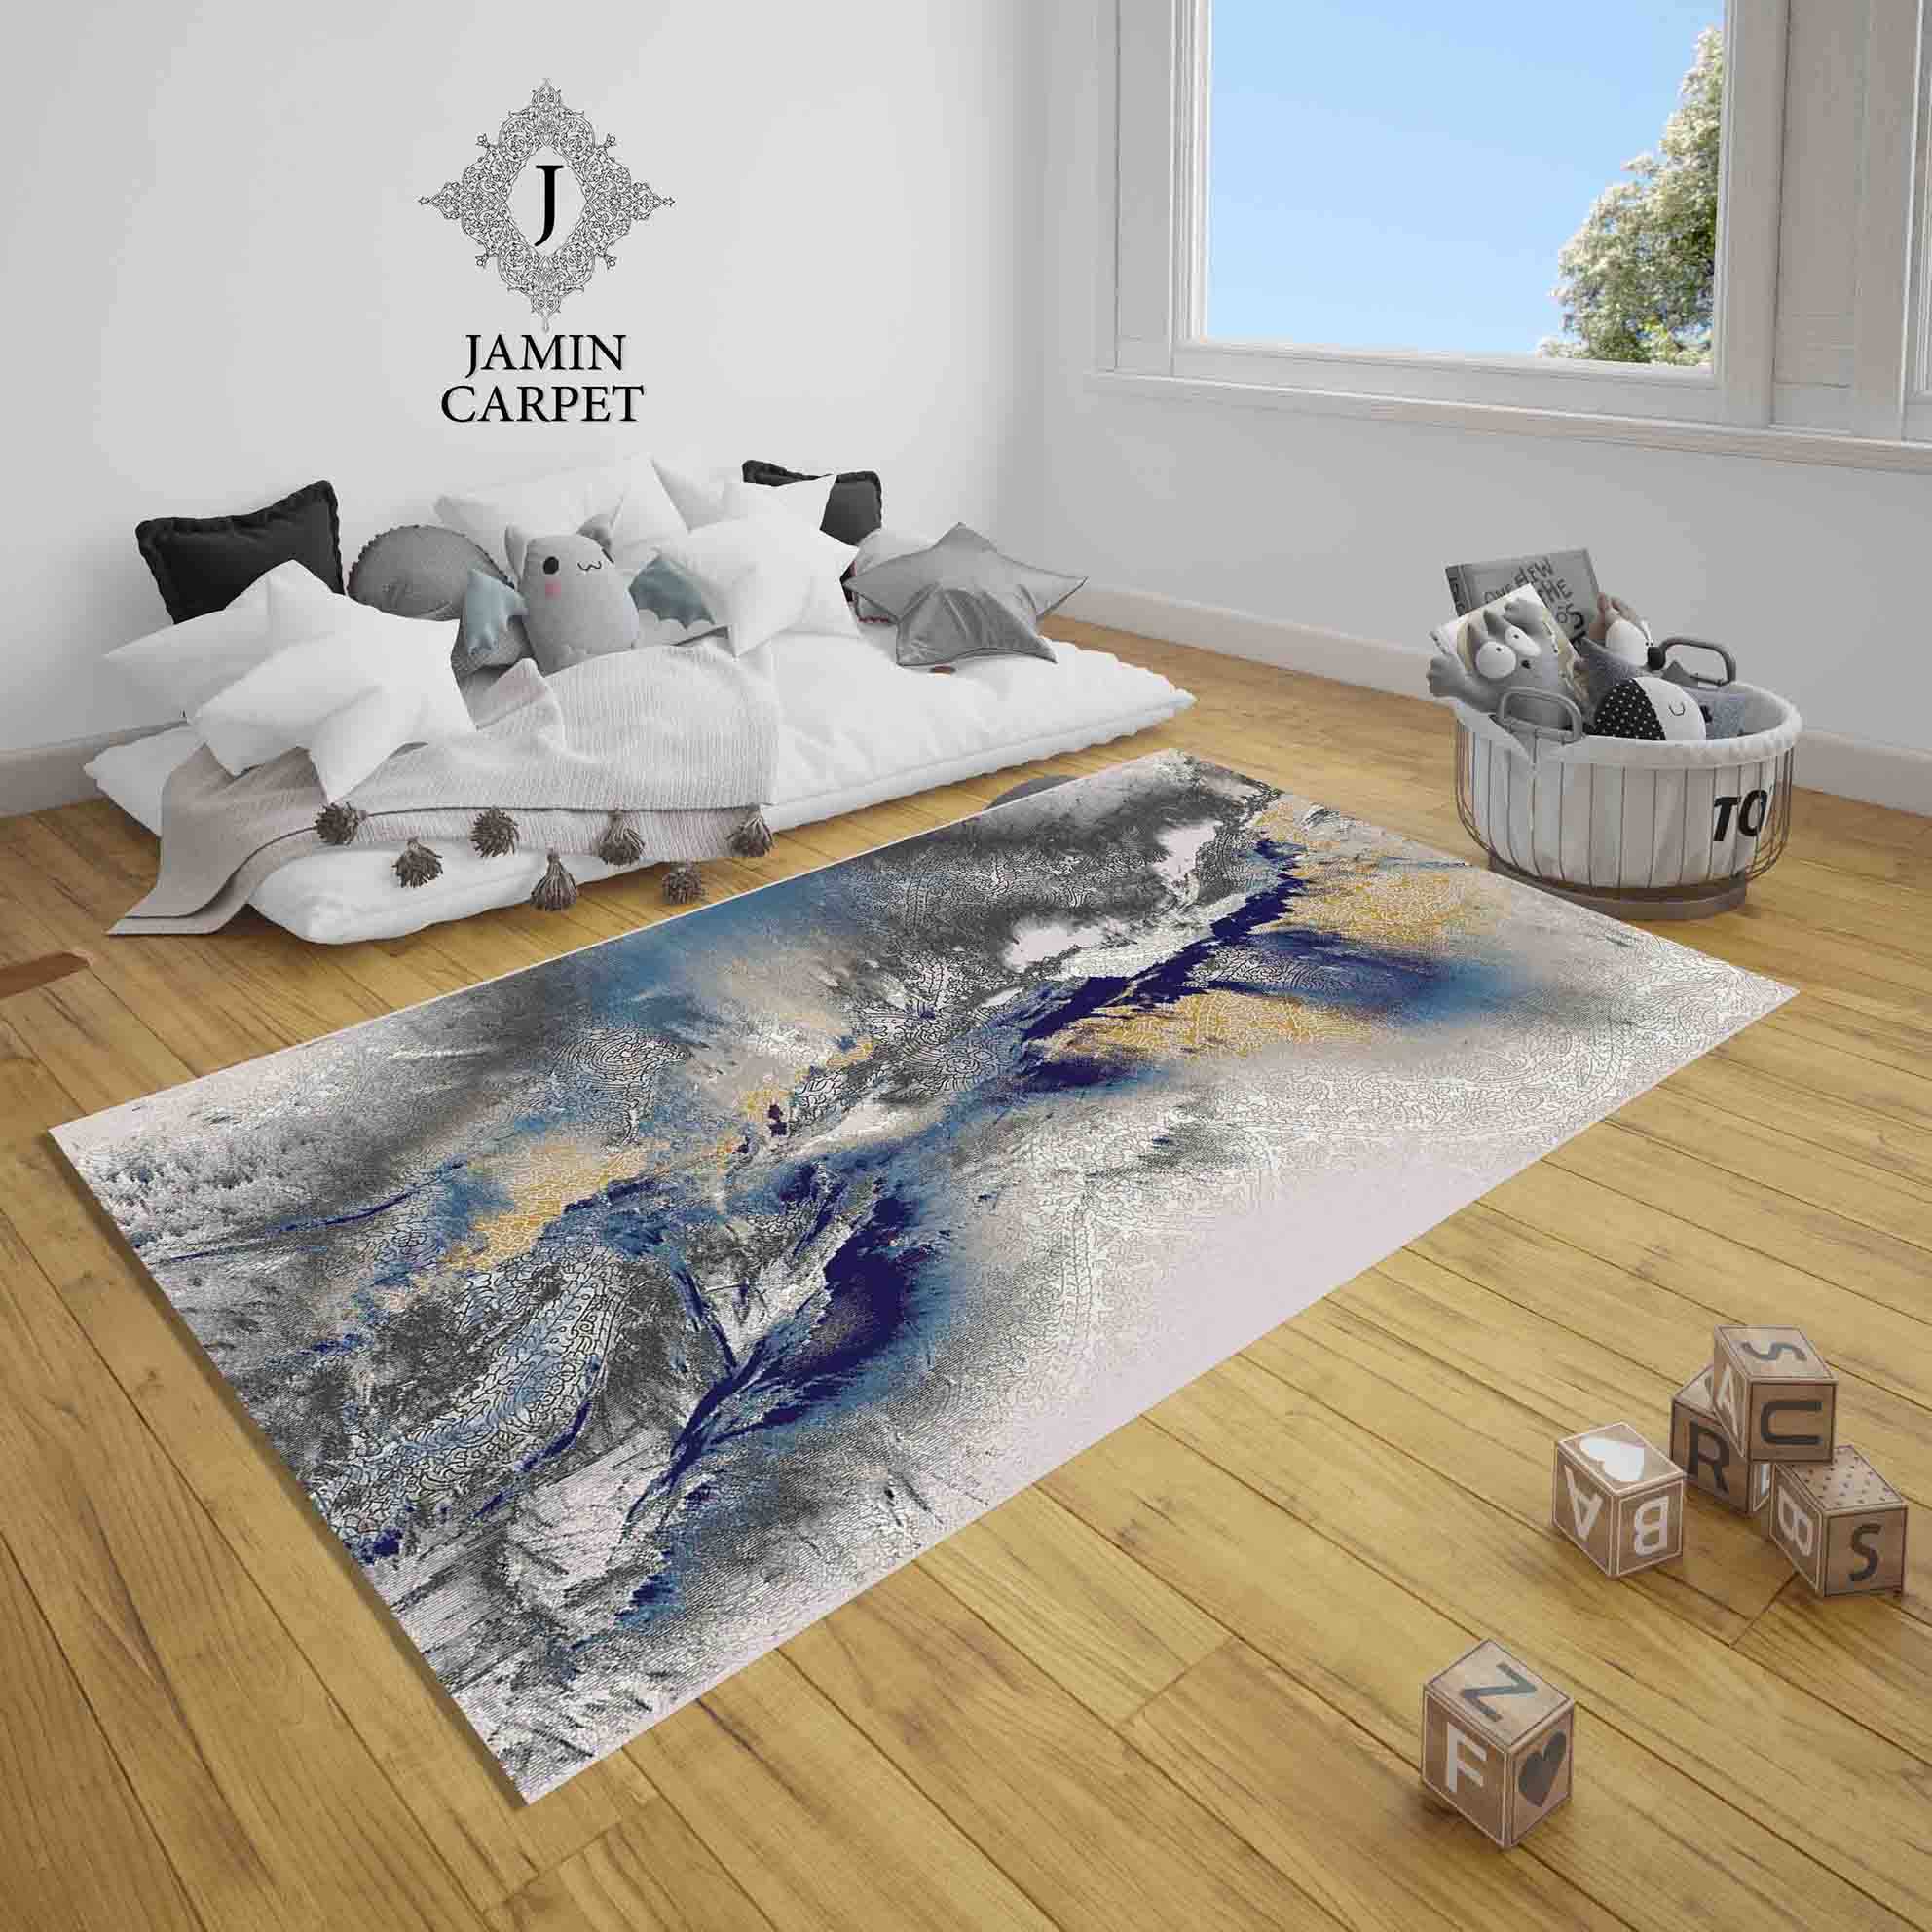 Fantasy carpet, code 263, comb 400, density 1800, all acrylic